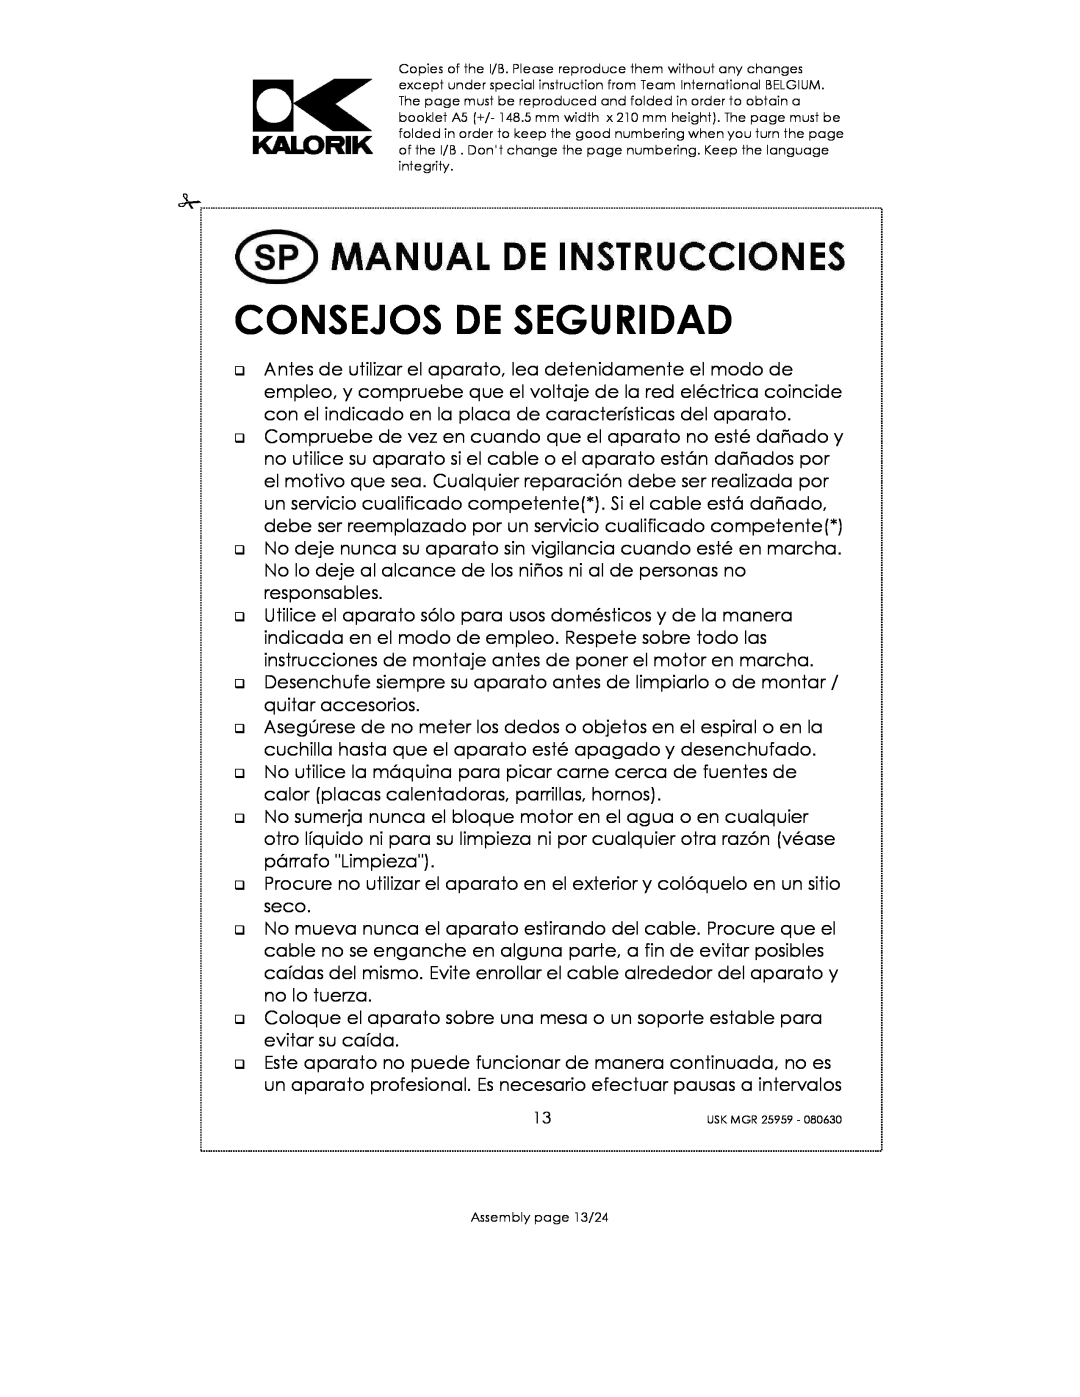 Kalorik USK MGR 25959 manual Consejos De Seguridad, Assembly page 13/24 